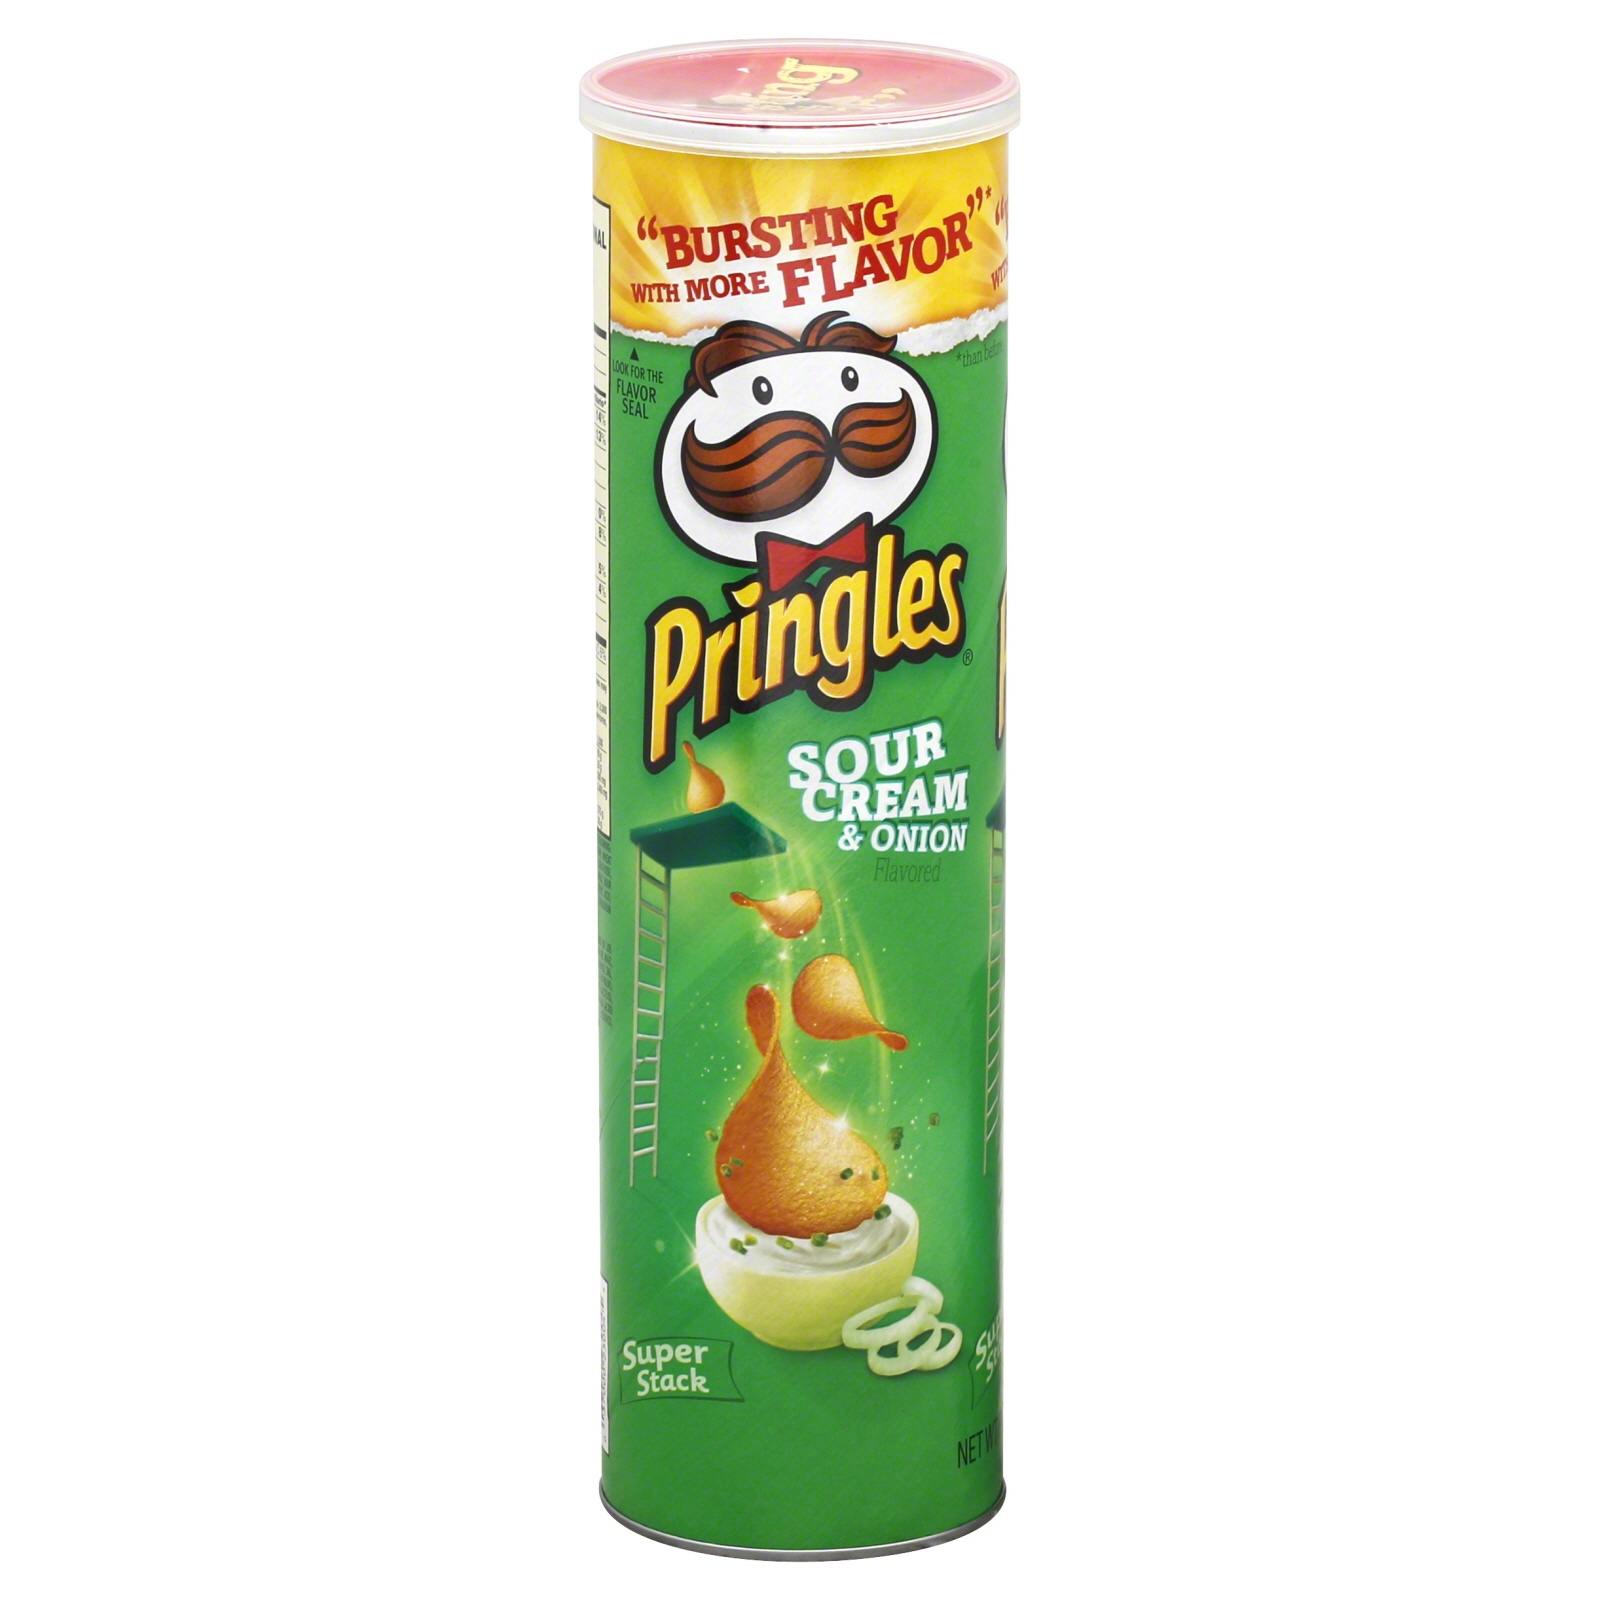 Pringles Potato Crisps, Sour Cream & Onion Flavored, Super Stack, 6.38 oz (181 g)